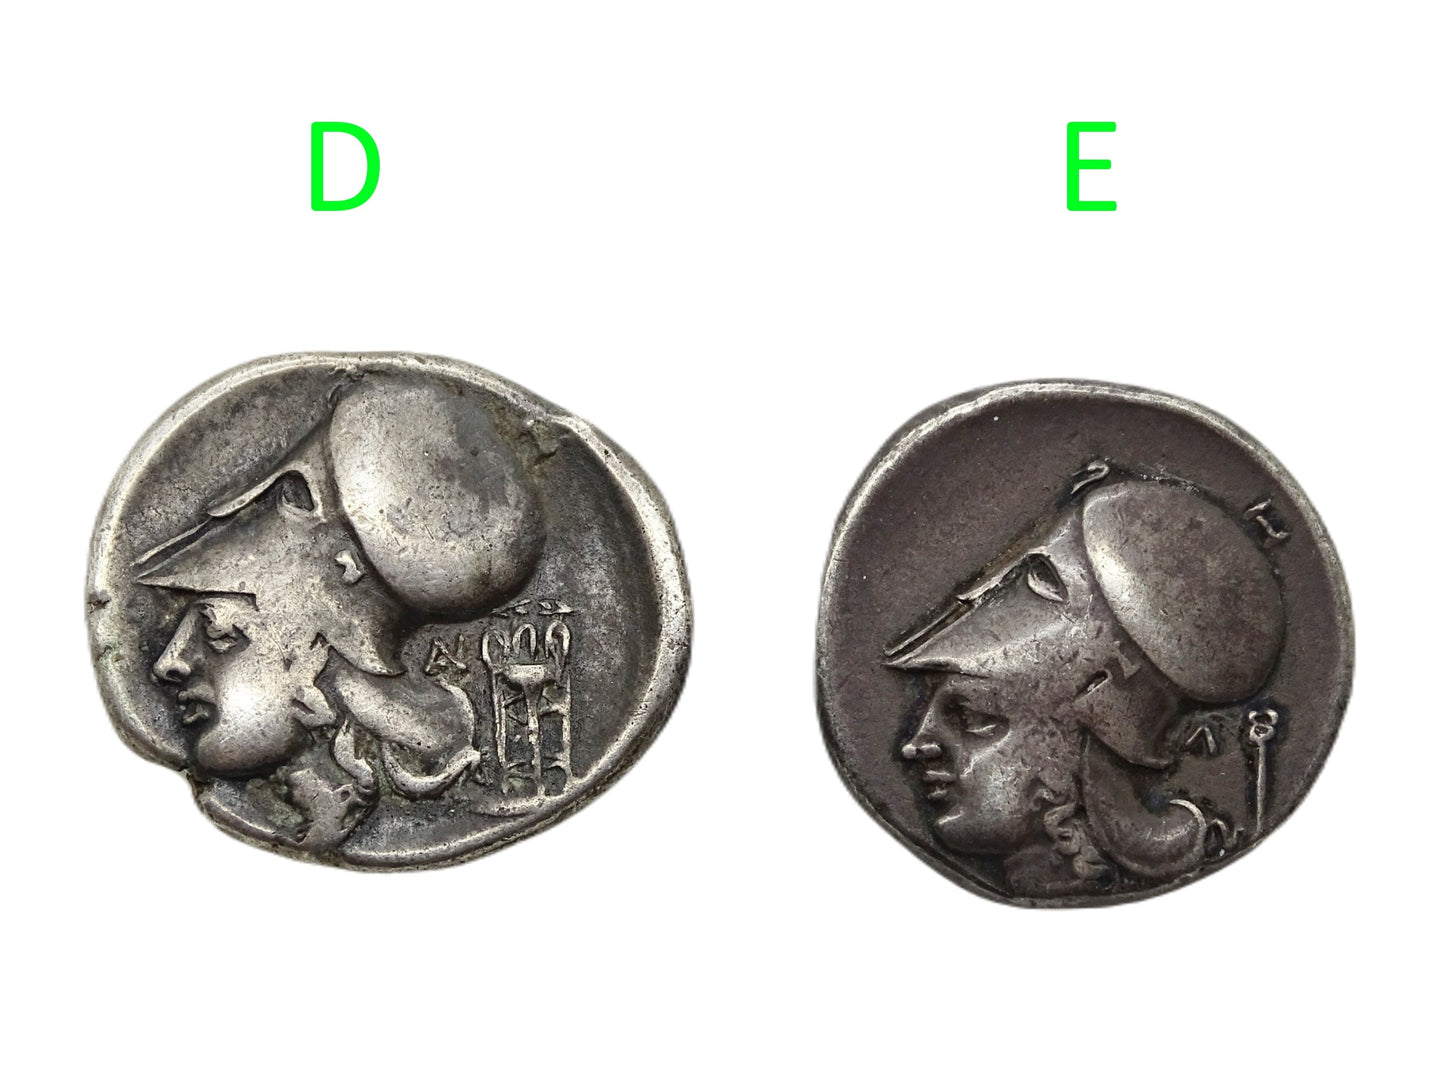 Pegasus coin